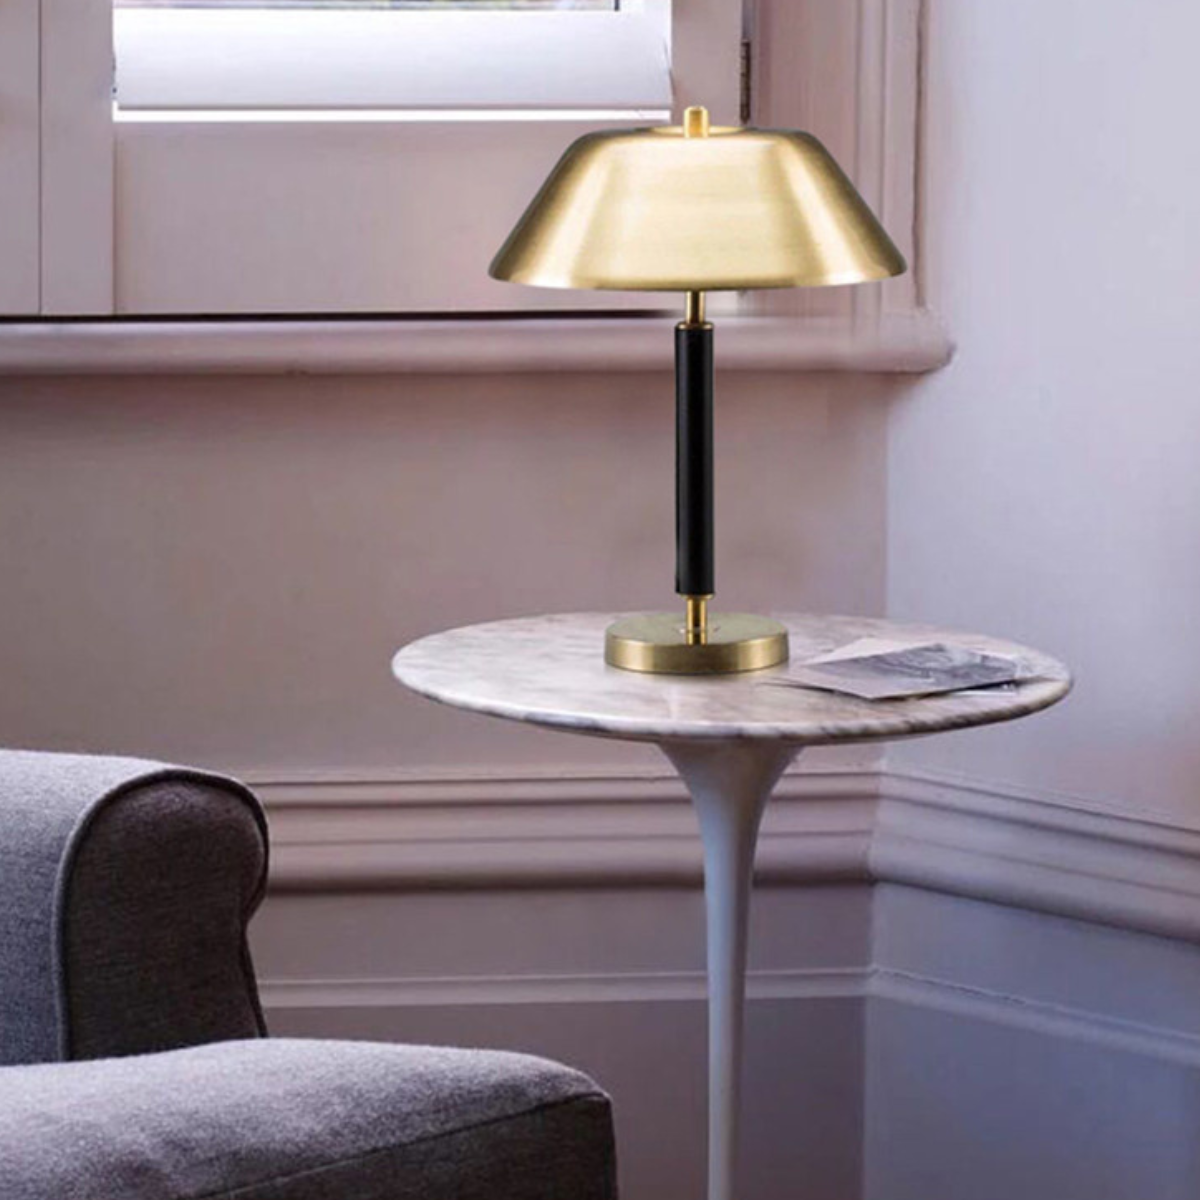 Franklin-Simple-Design-Table-Lamp-8